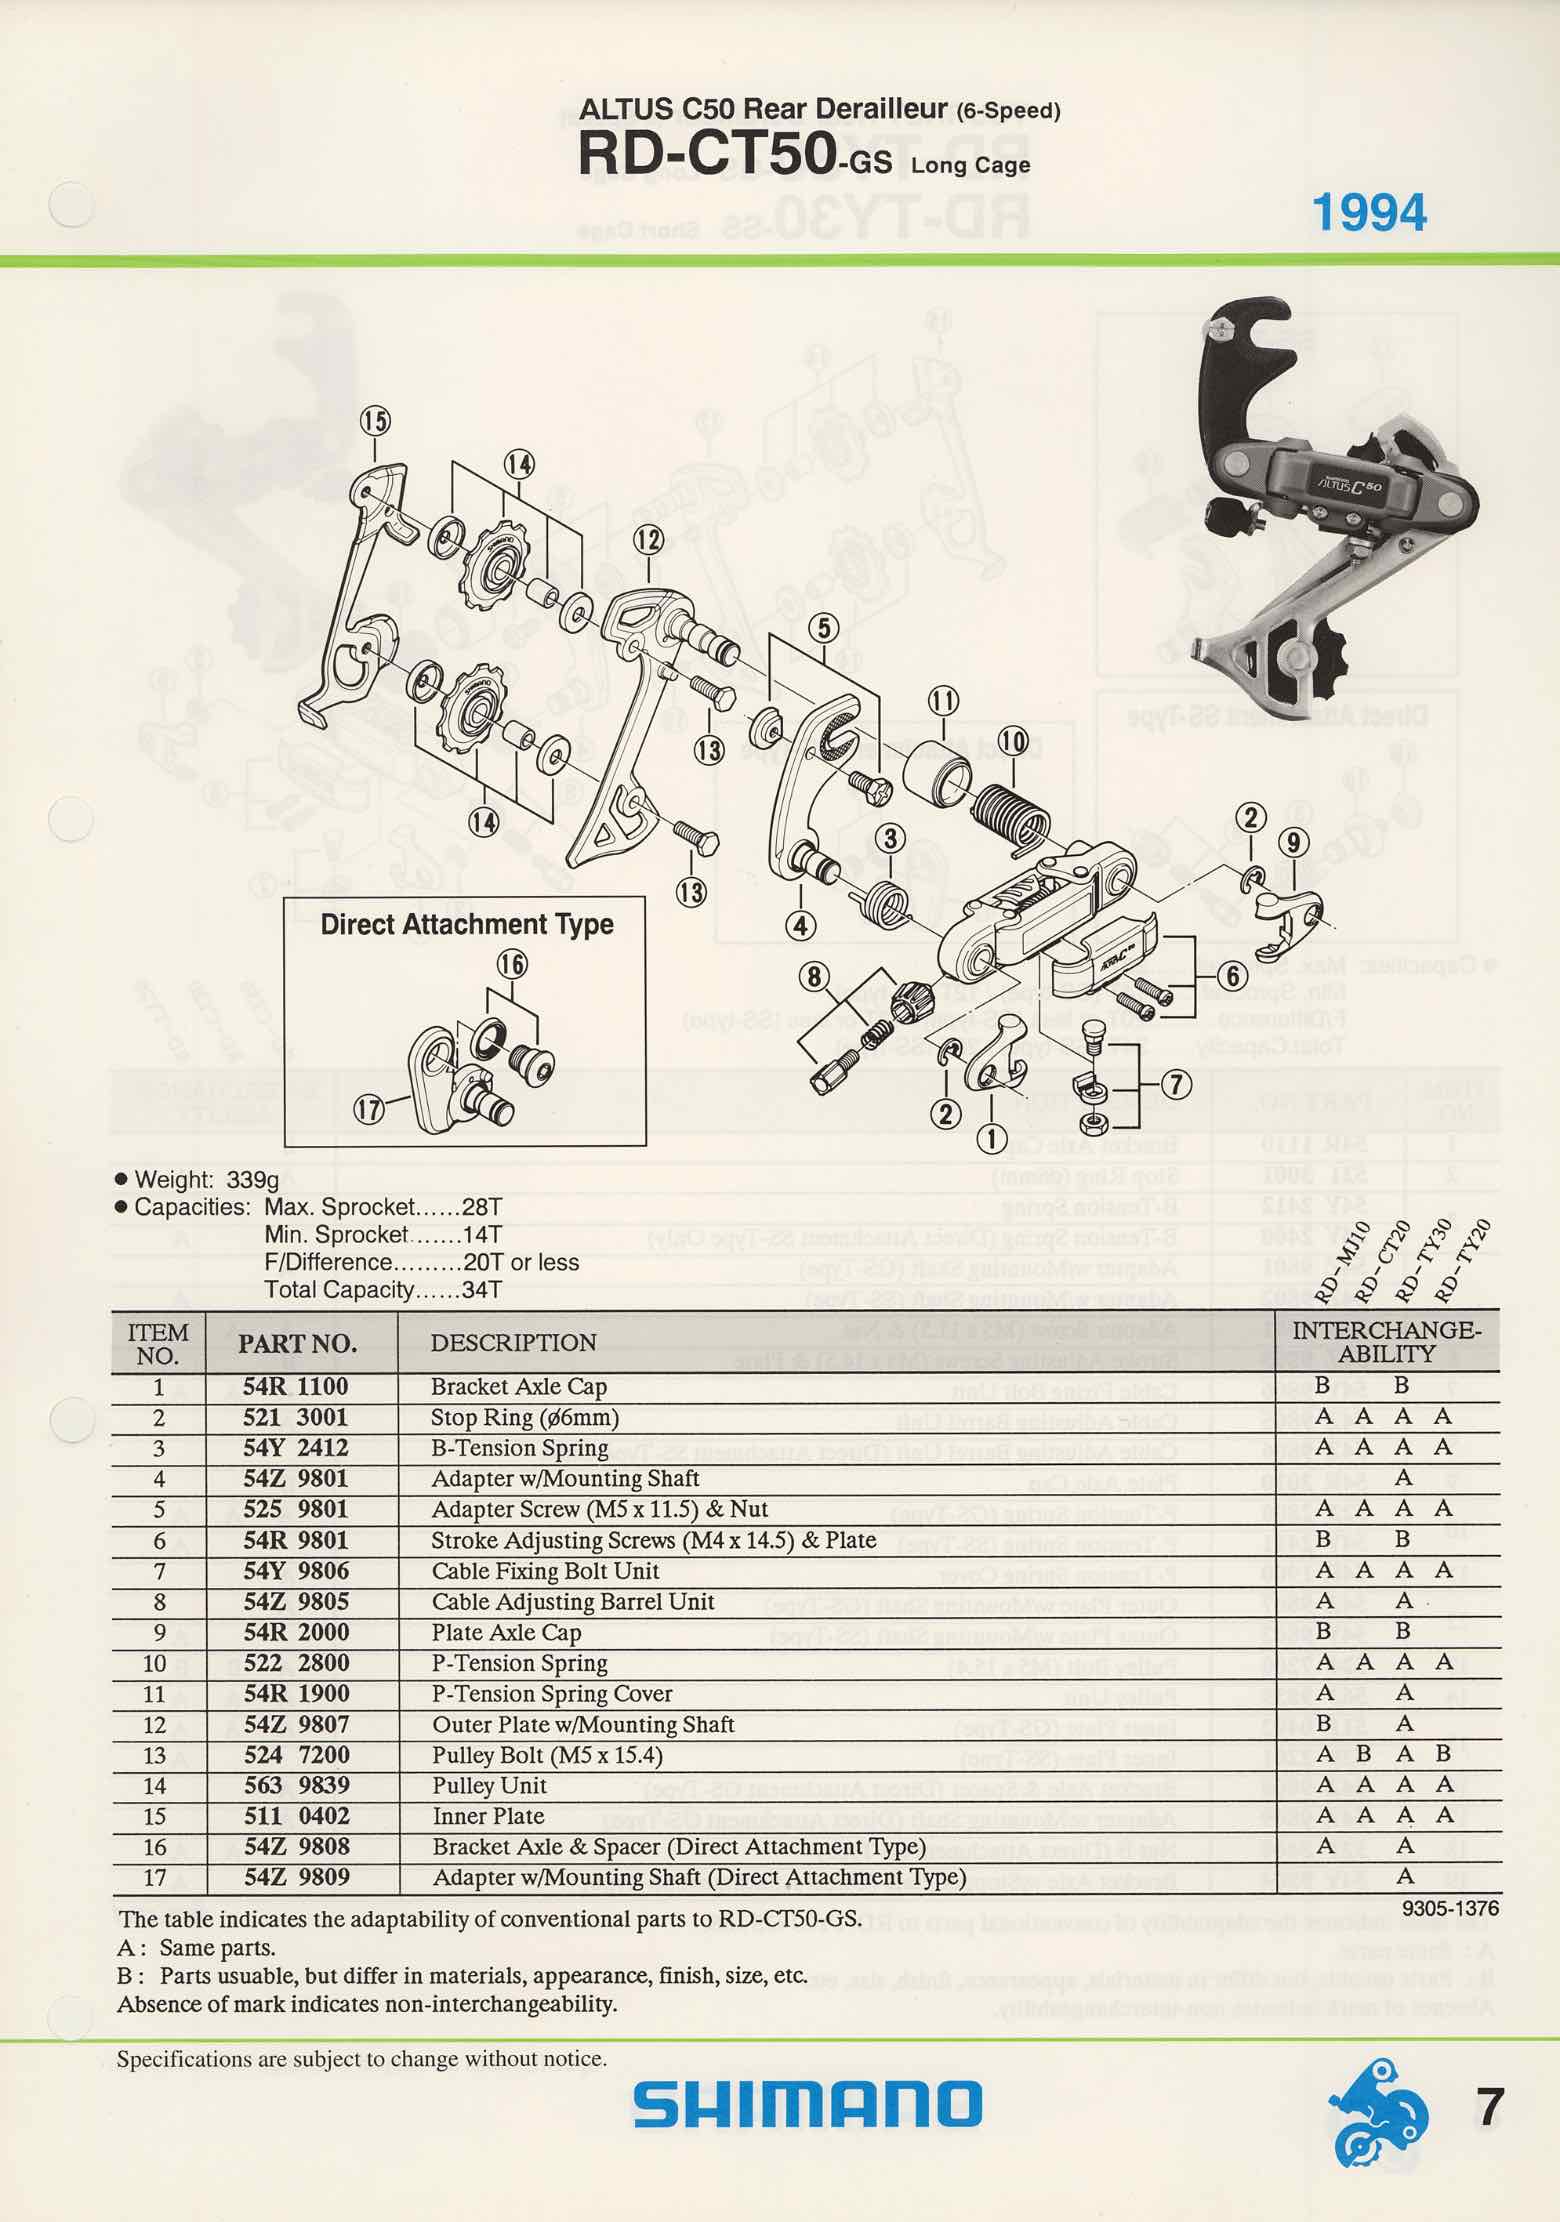 Shimano Spare Parts Catalogue - 1994 to 2004 s5 p7 main image